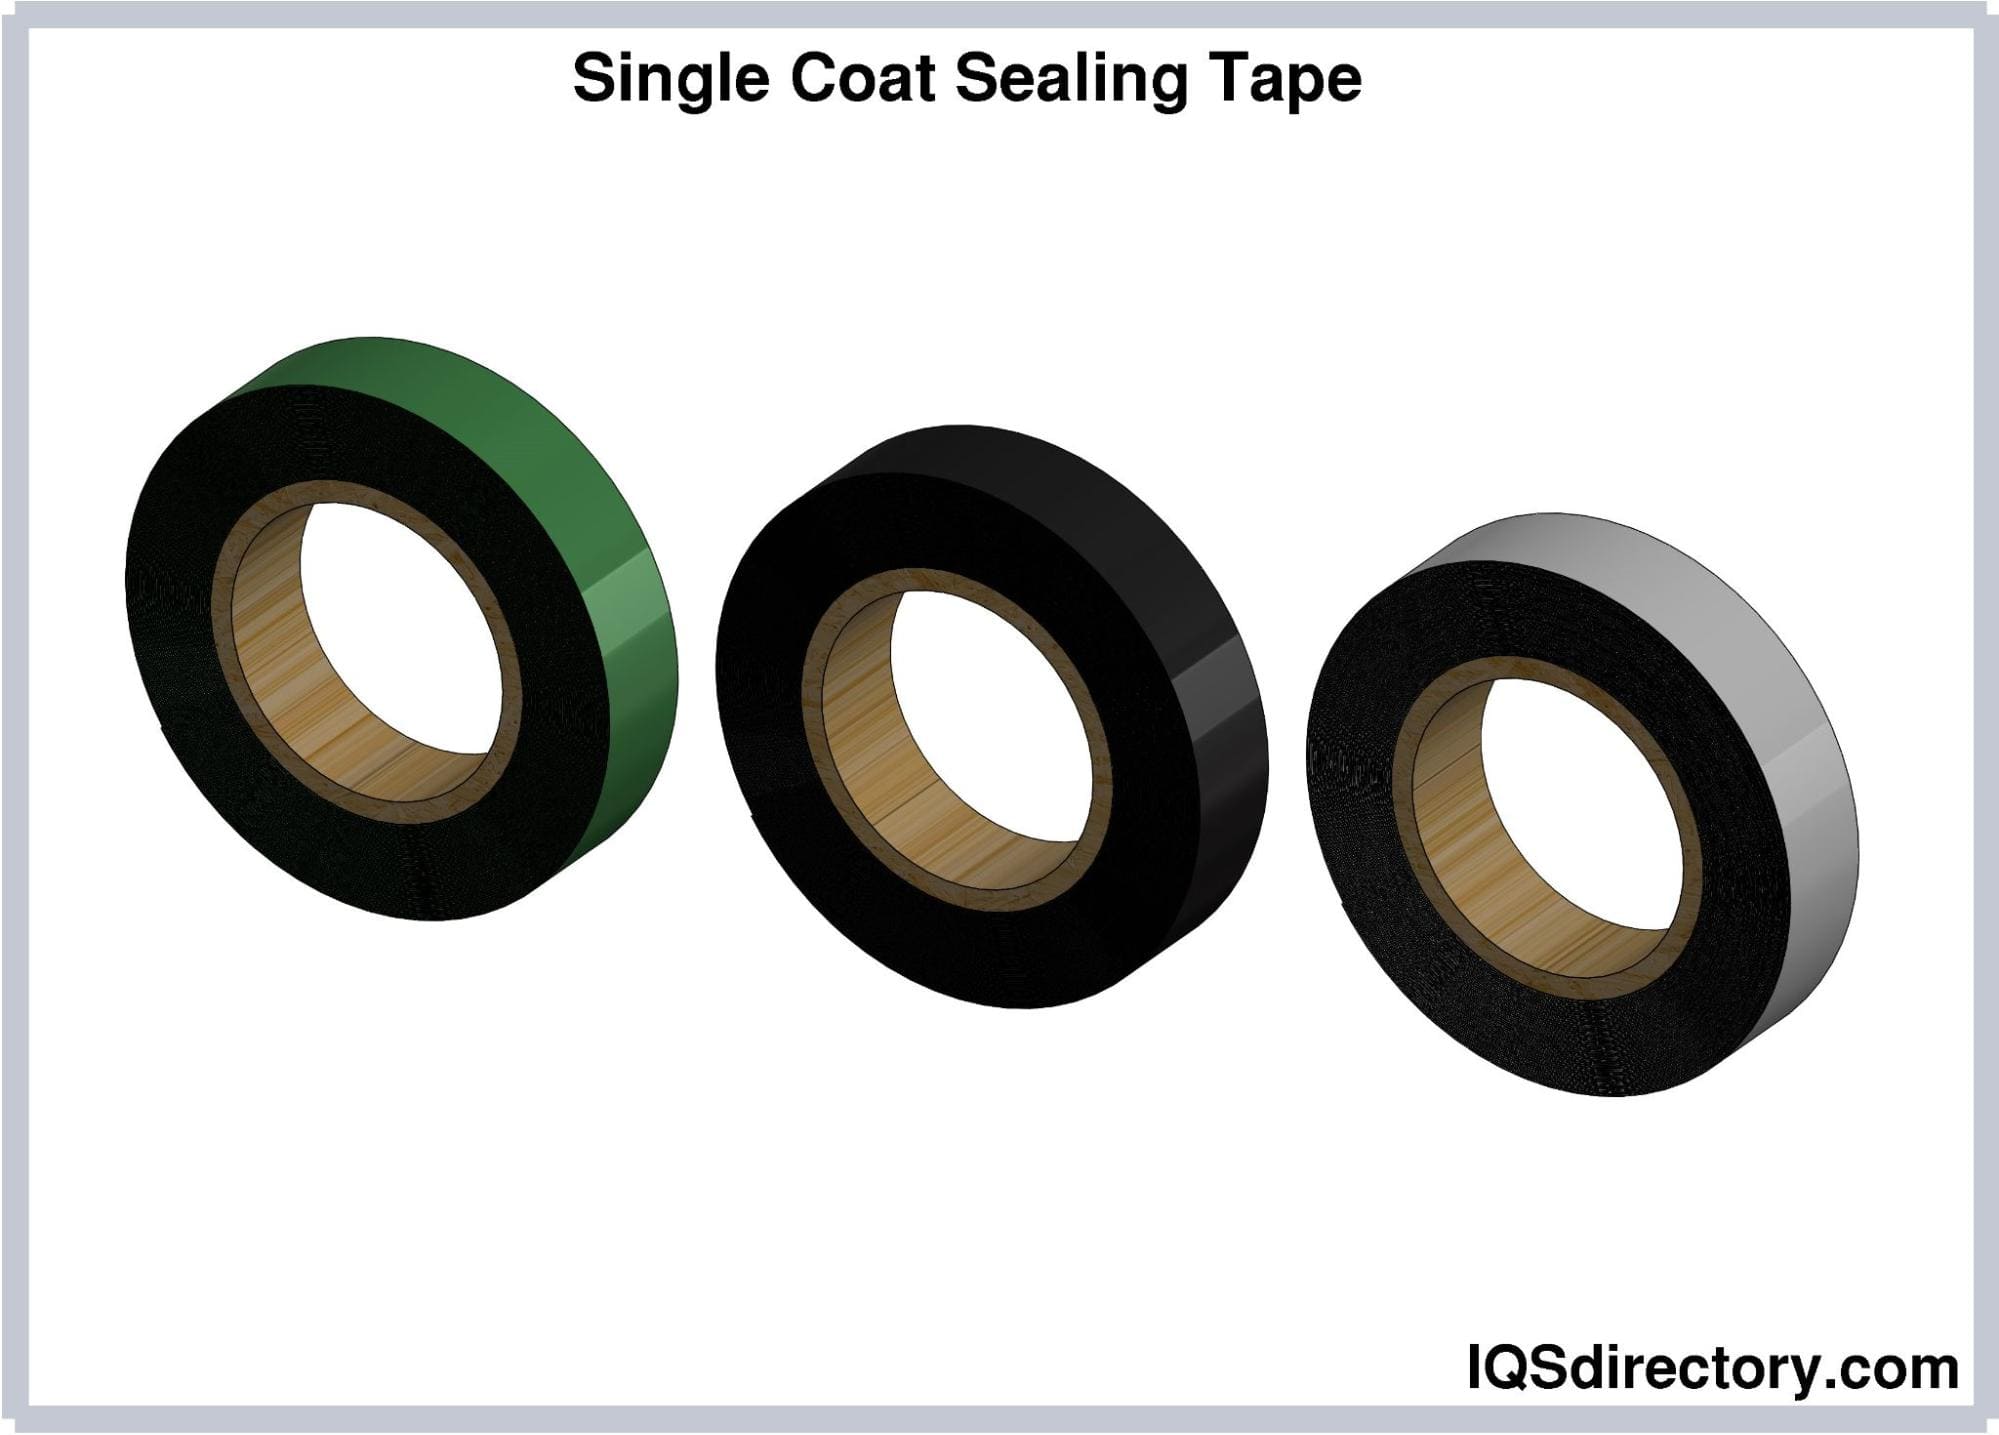 Single Coat Sealing Tape